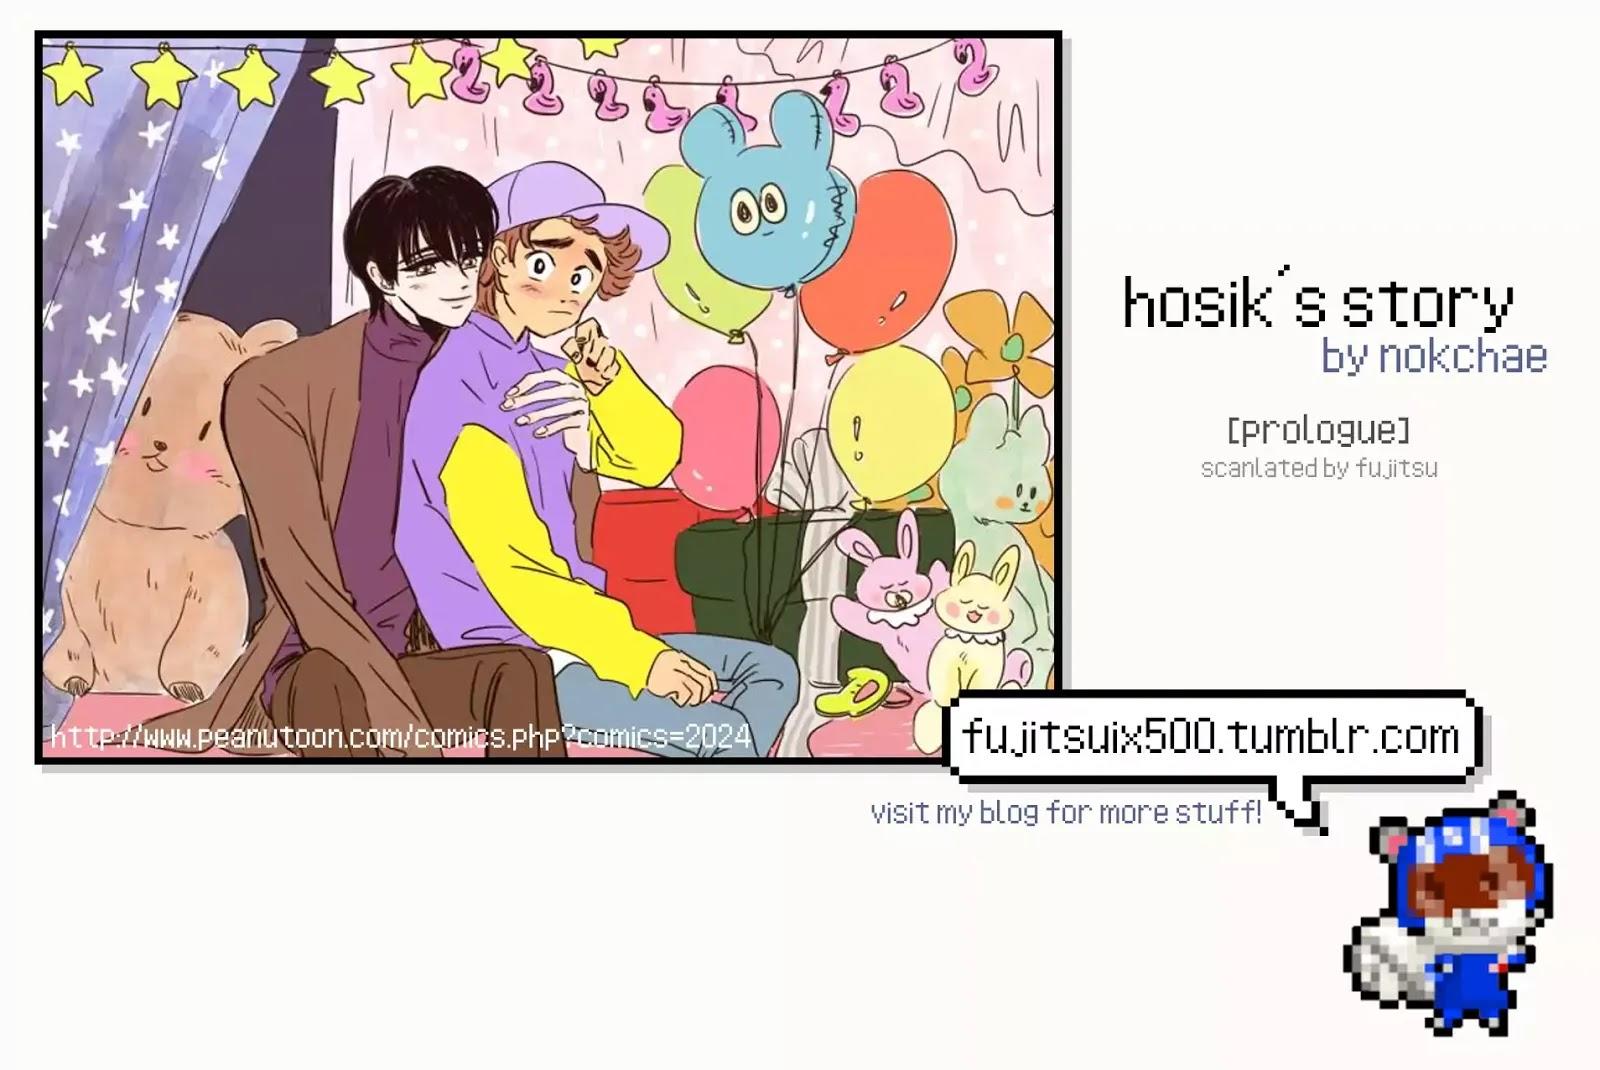 Hosik’s Story